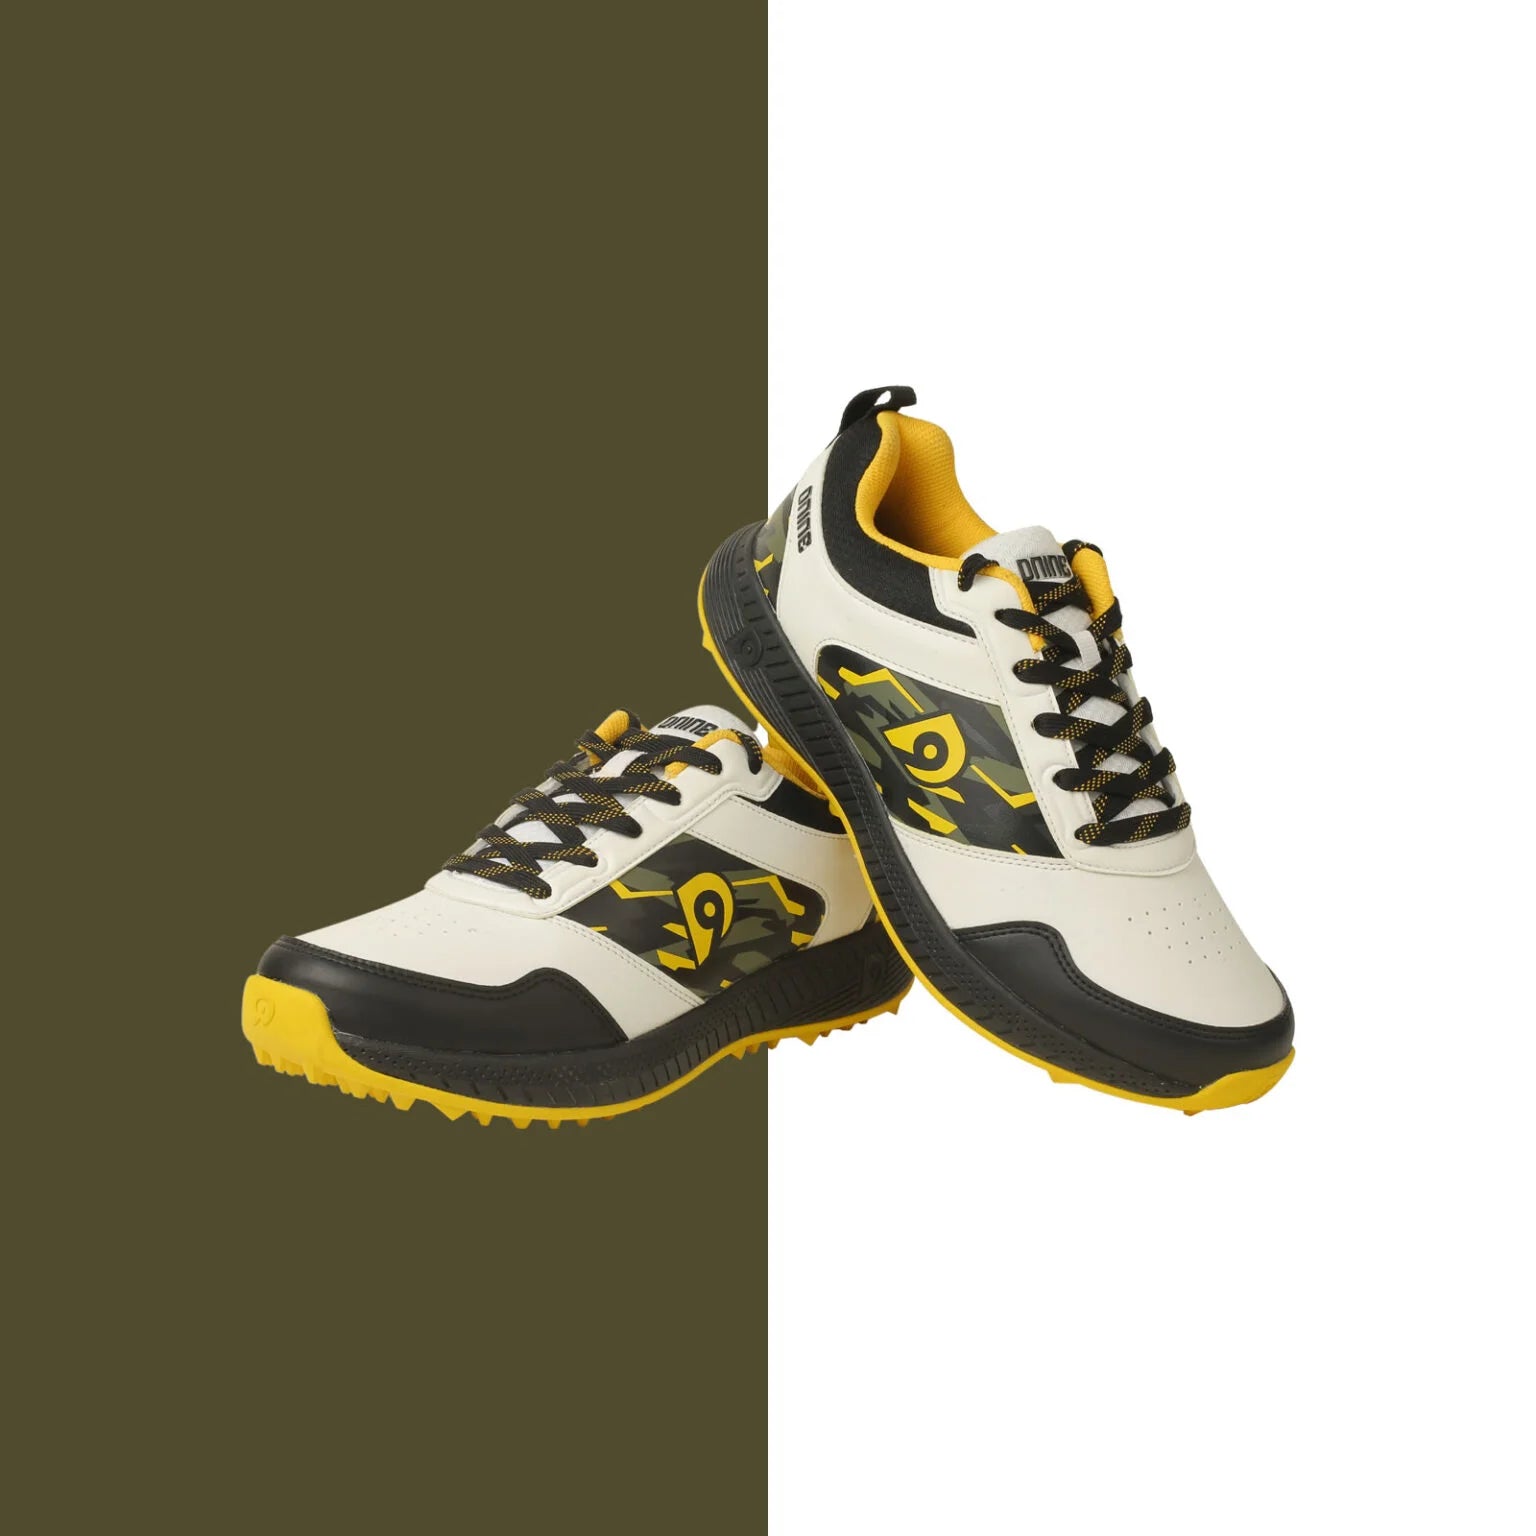 DNINE Polyurethane (PU) Prince-1 Yellow/Black Cricket Rubber Spike Shoes